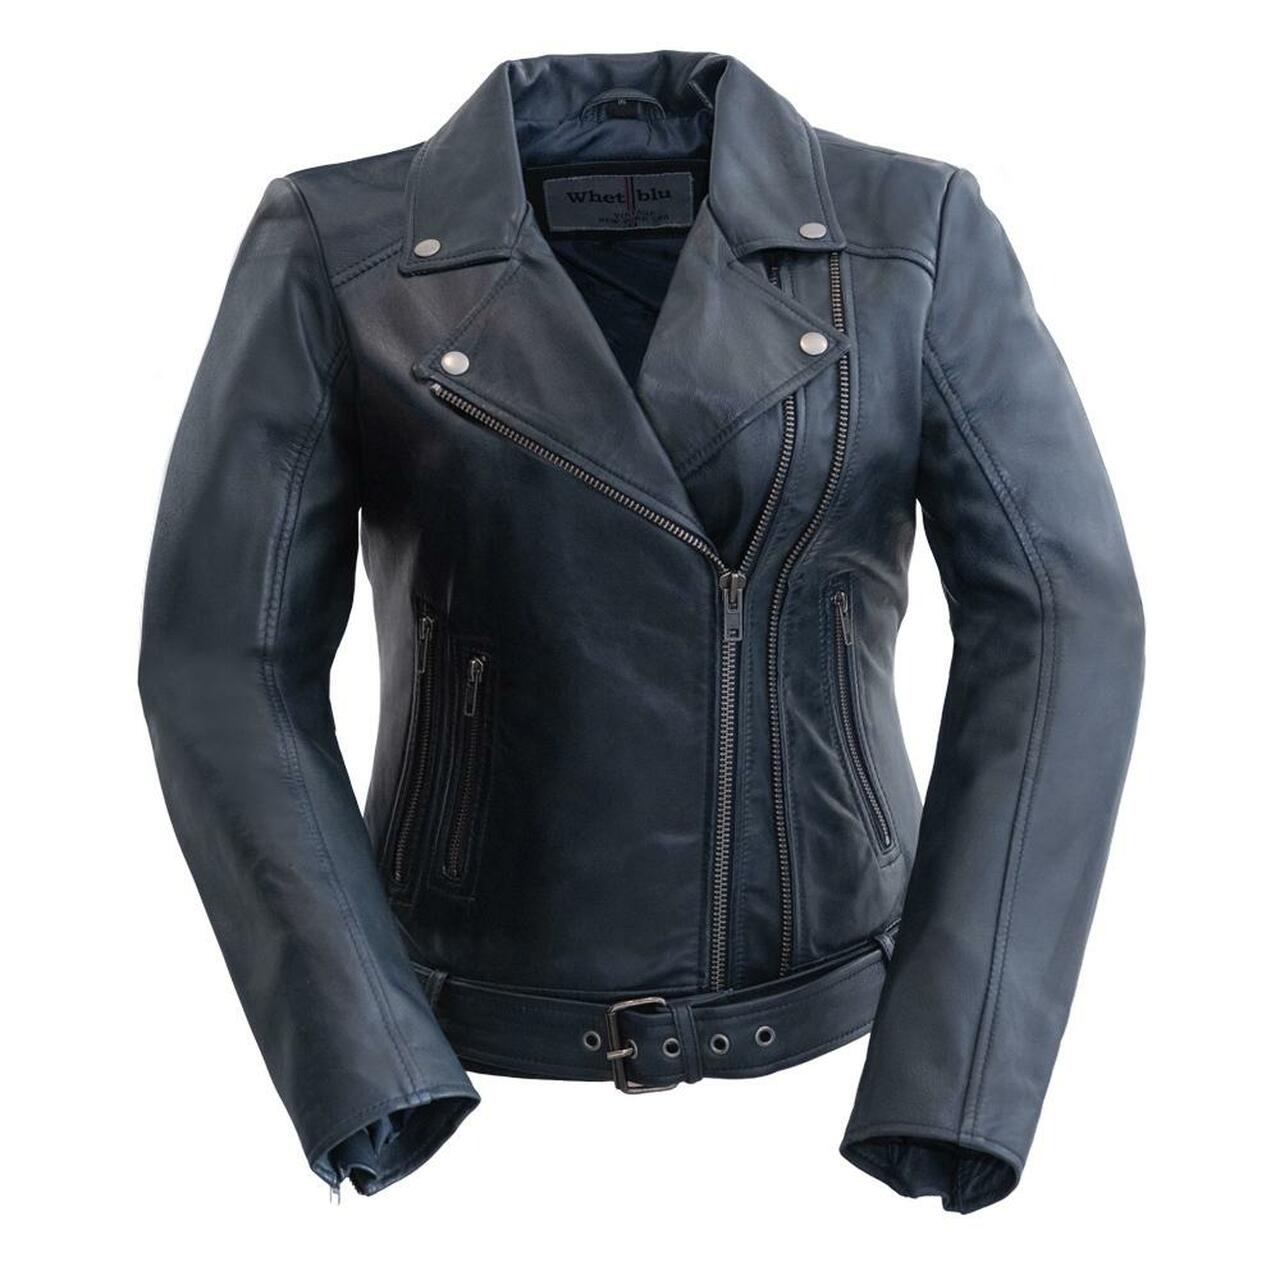 Chloe - Women's Leather Motorcycle Jacket - Red - Blue - Violet - Black